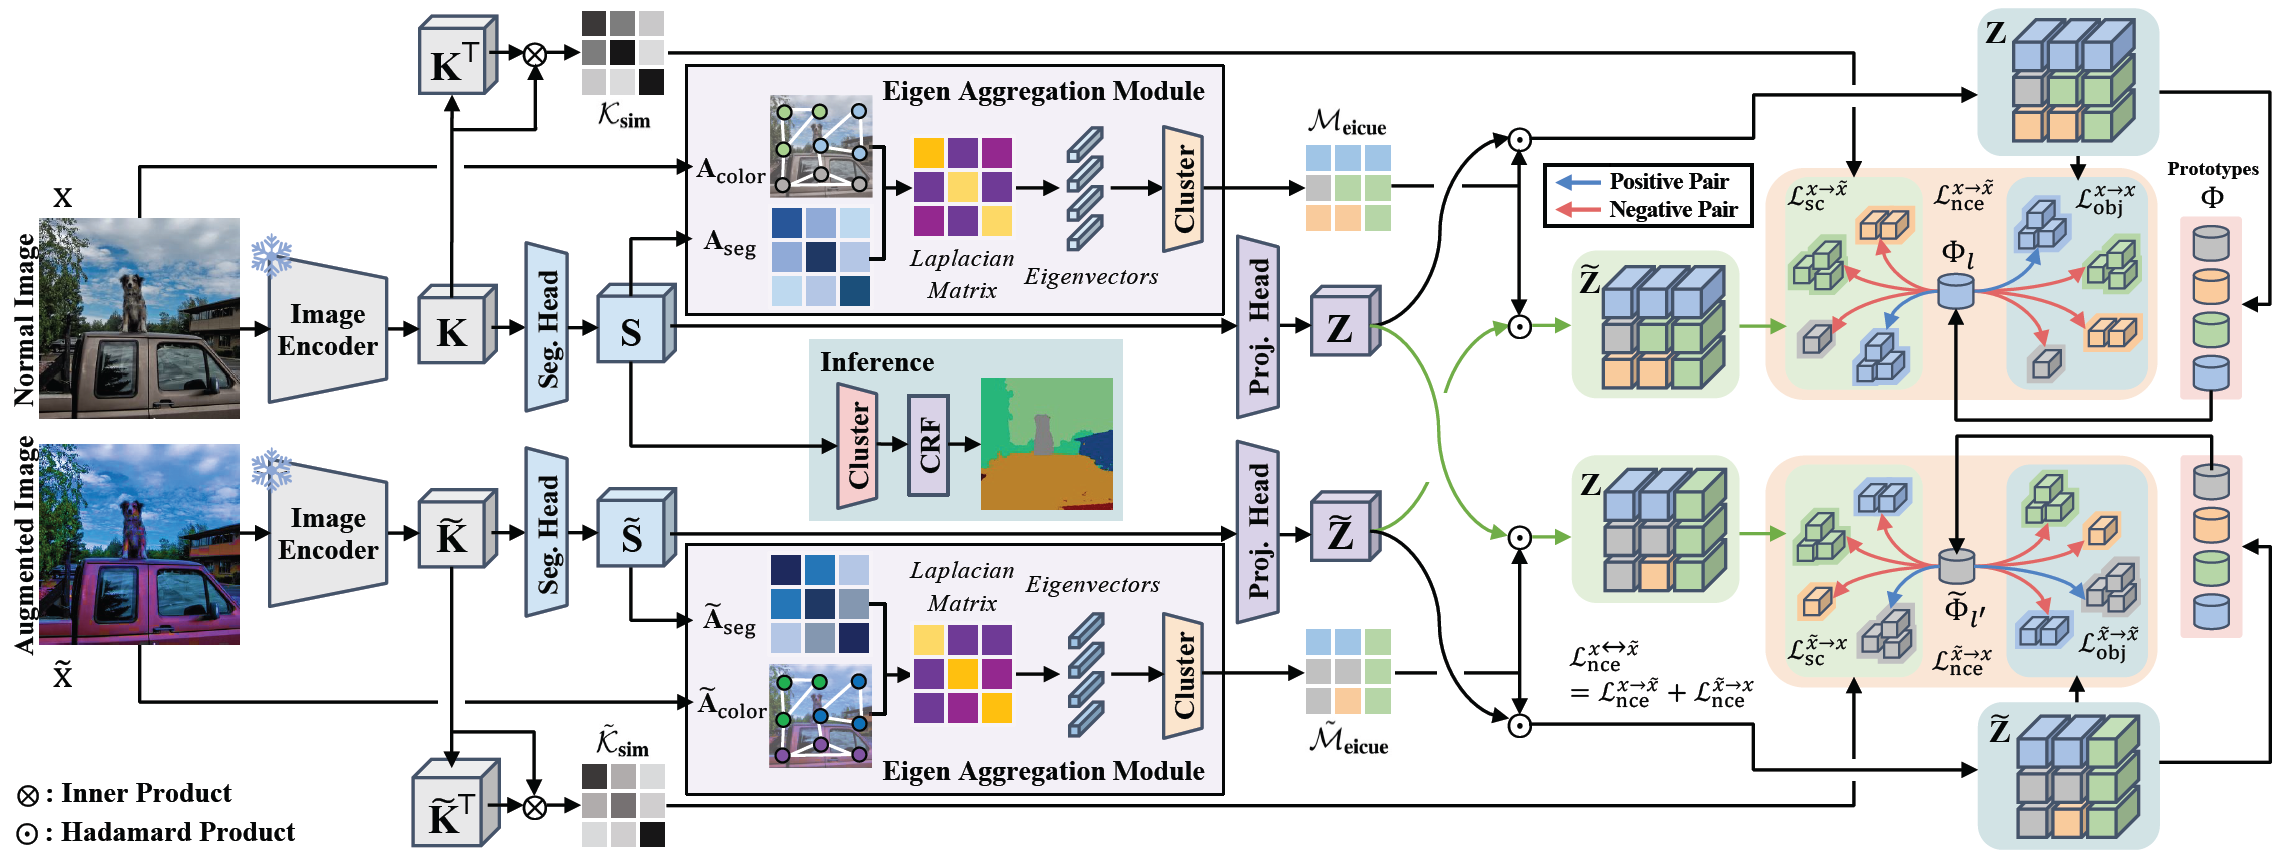 EAGLE: Eigen Aggregation Learning for Object-Centric Unsupervised Semantic Segmentation